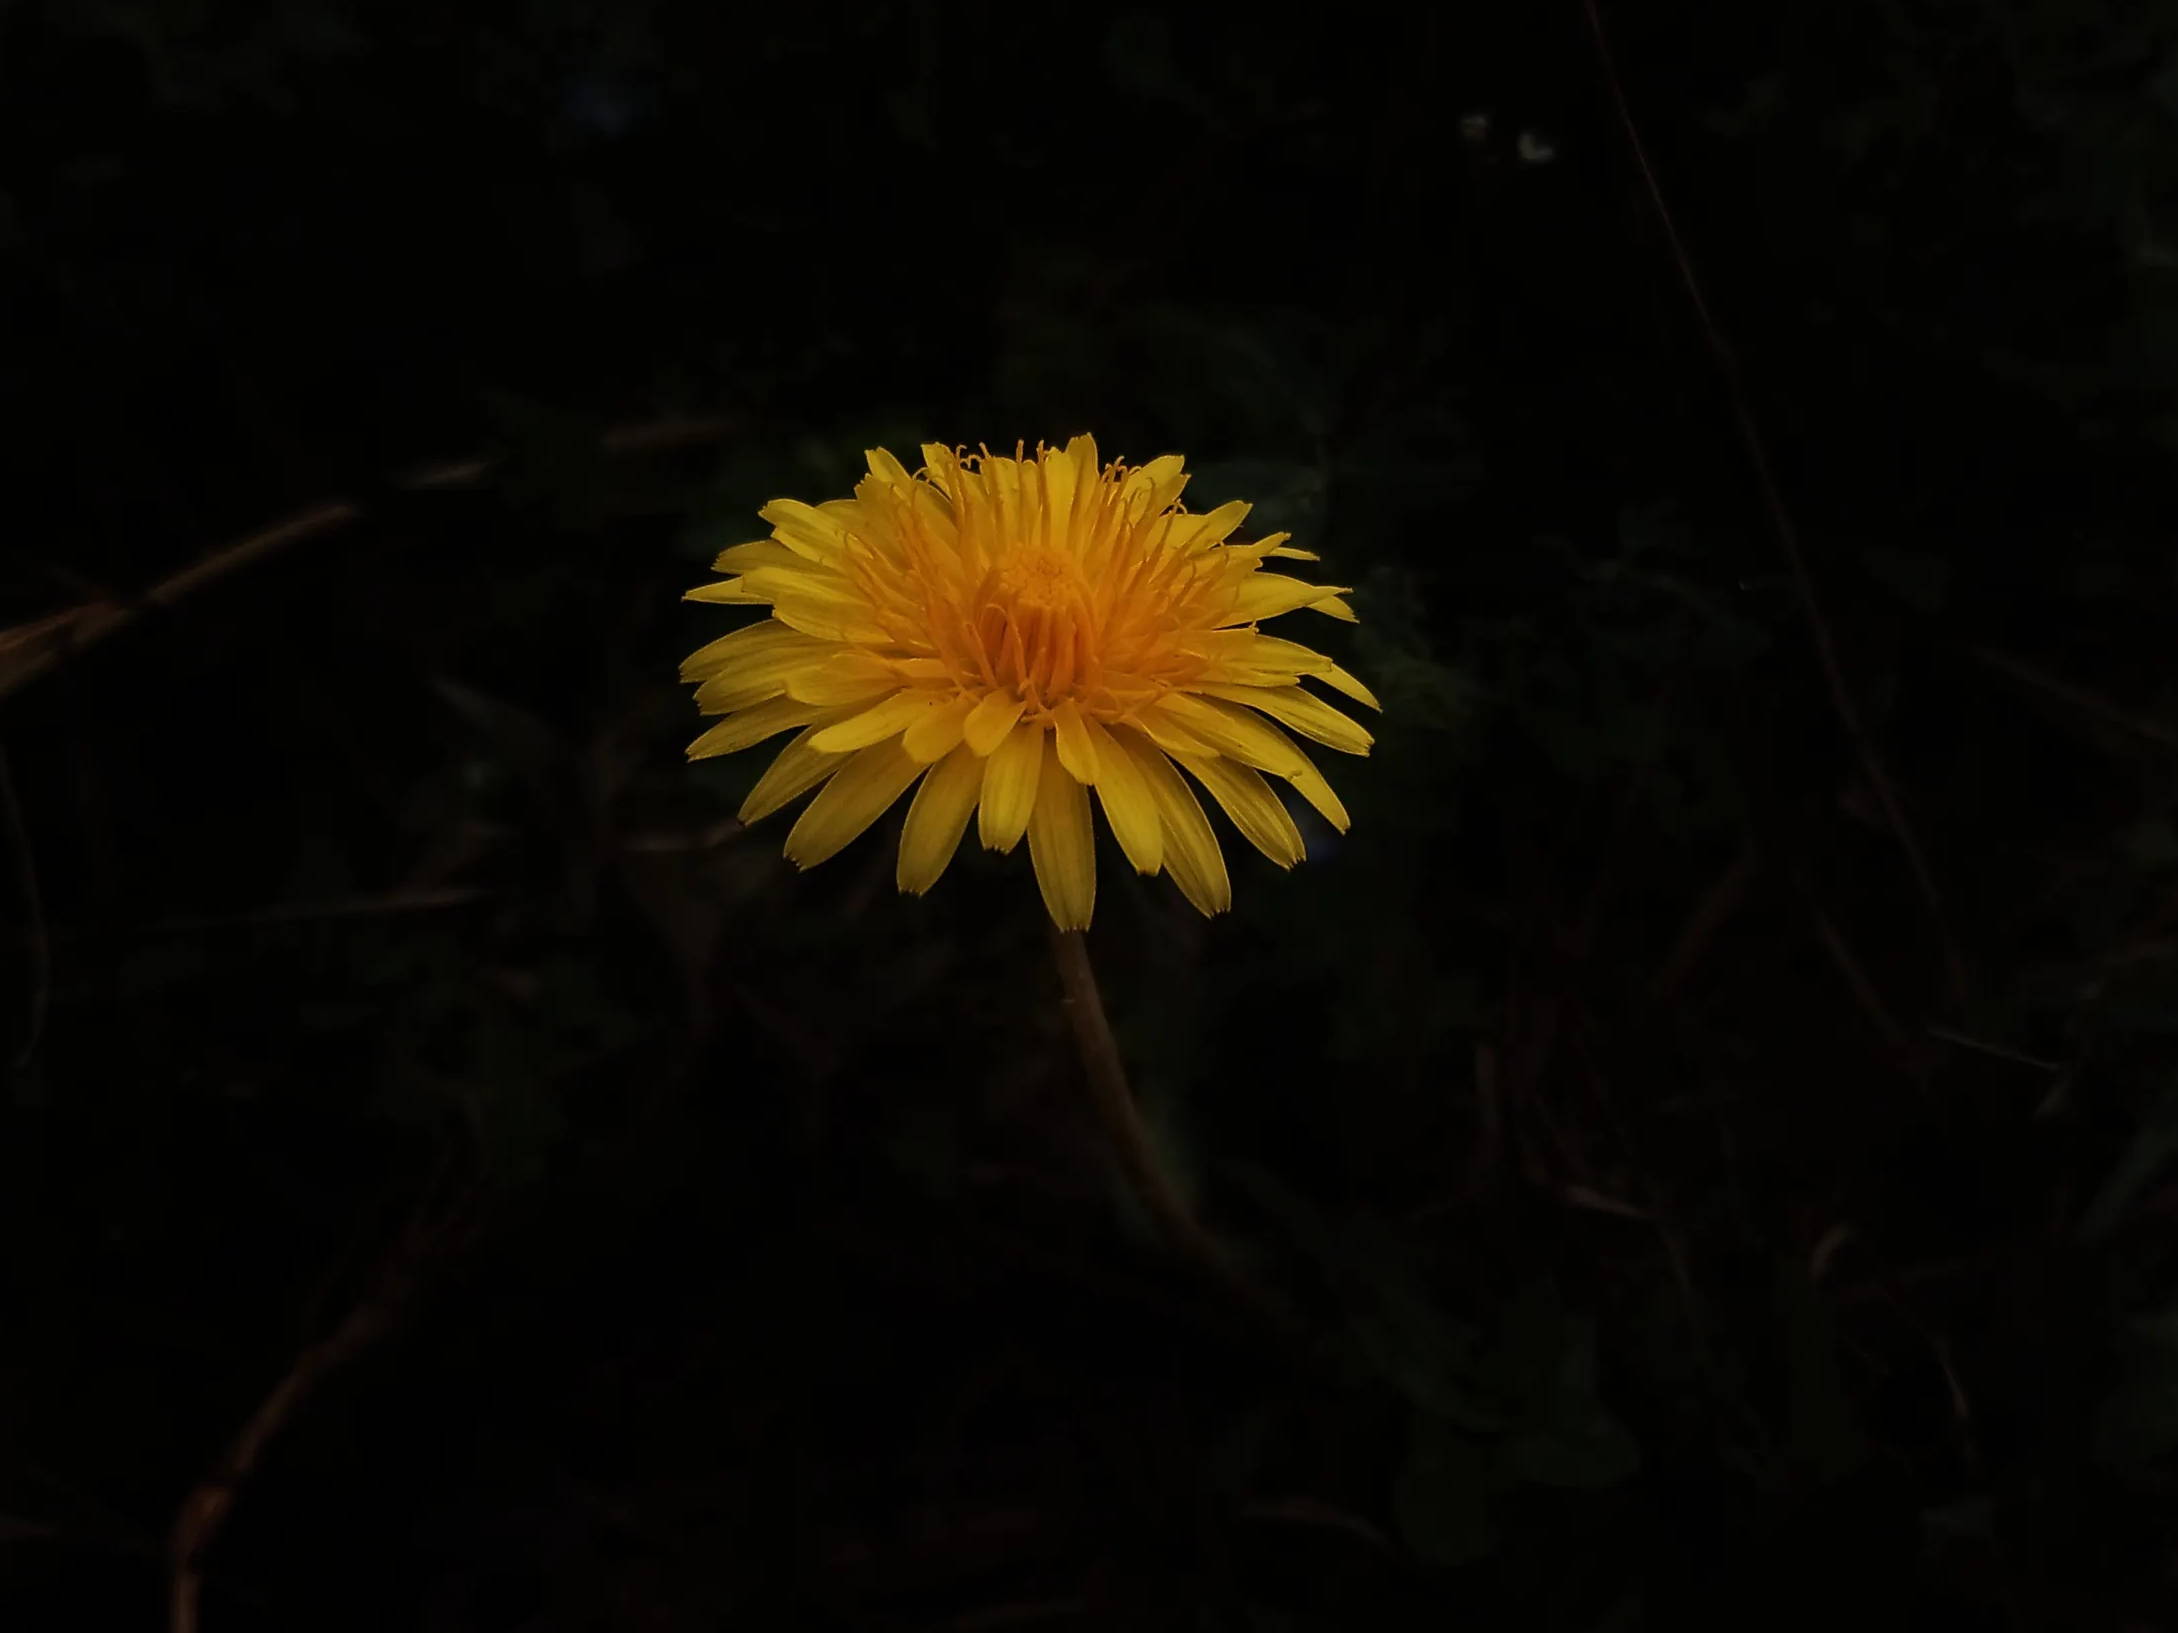 Yellow dandelion against a black background